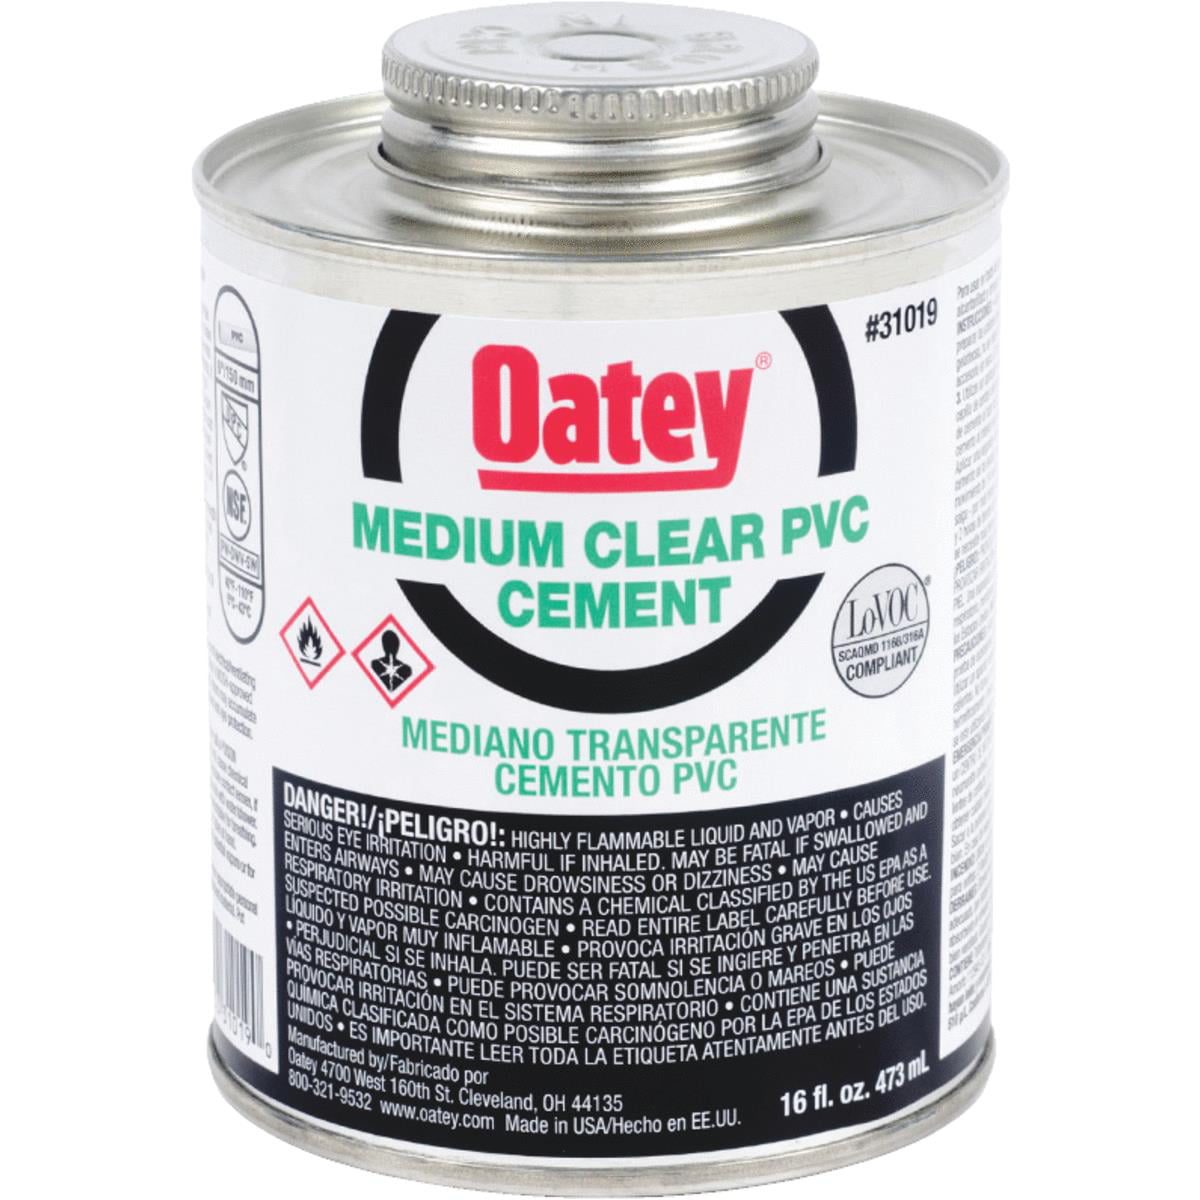 Oatey Medium Clear PVC Cement - Walmart.com - Walmart.com